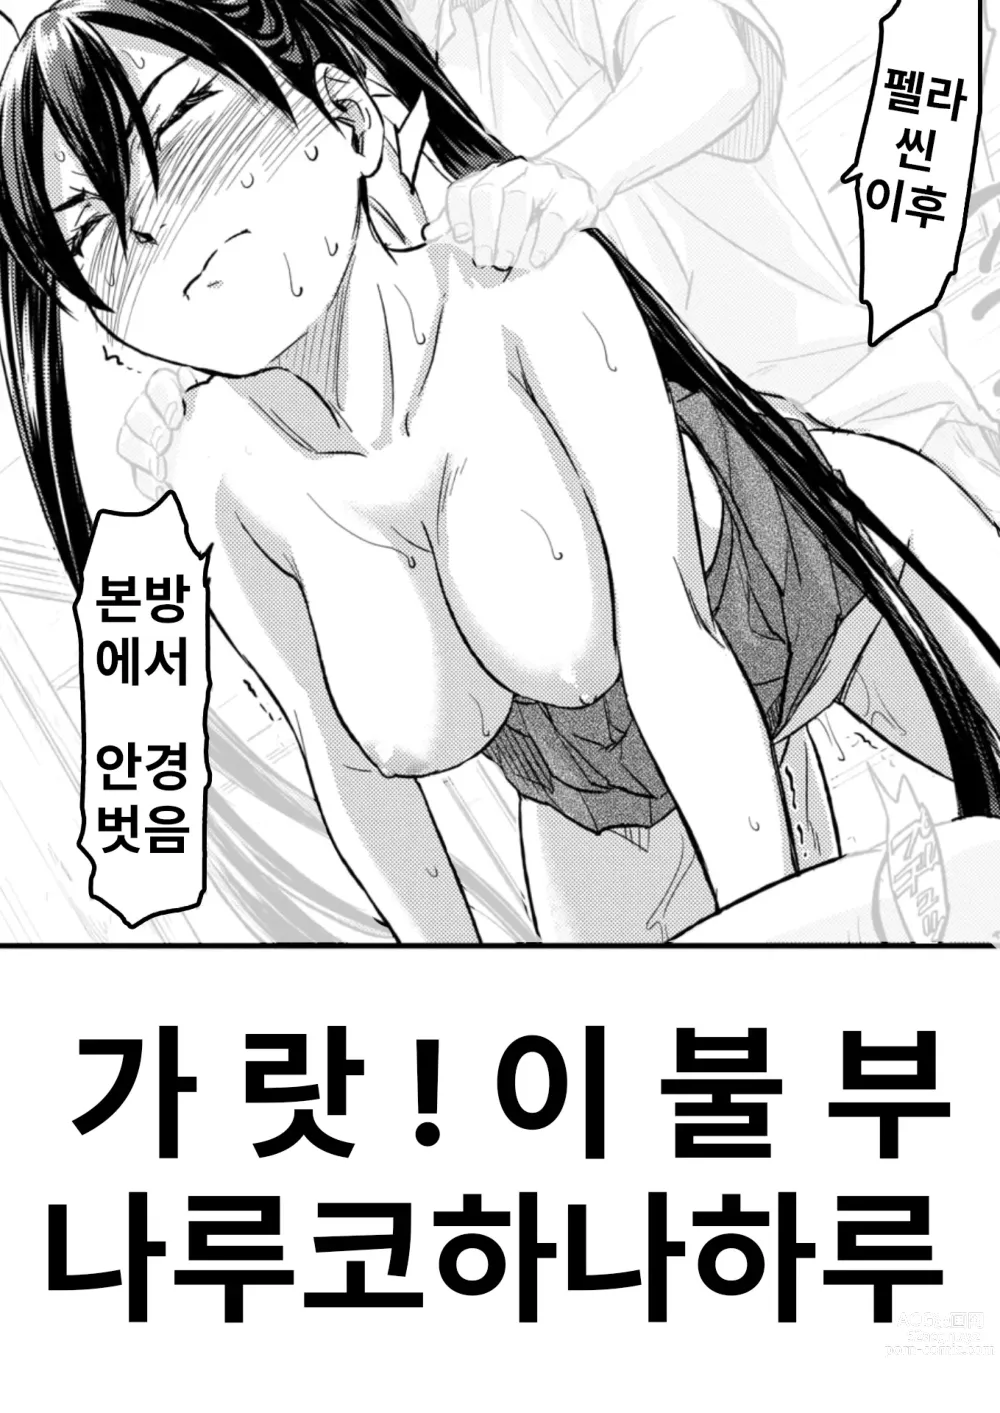 Page 1 of manga 가랏! 이불부